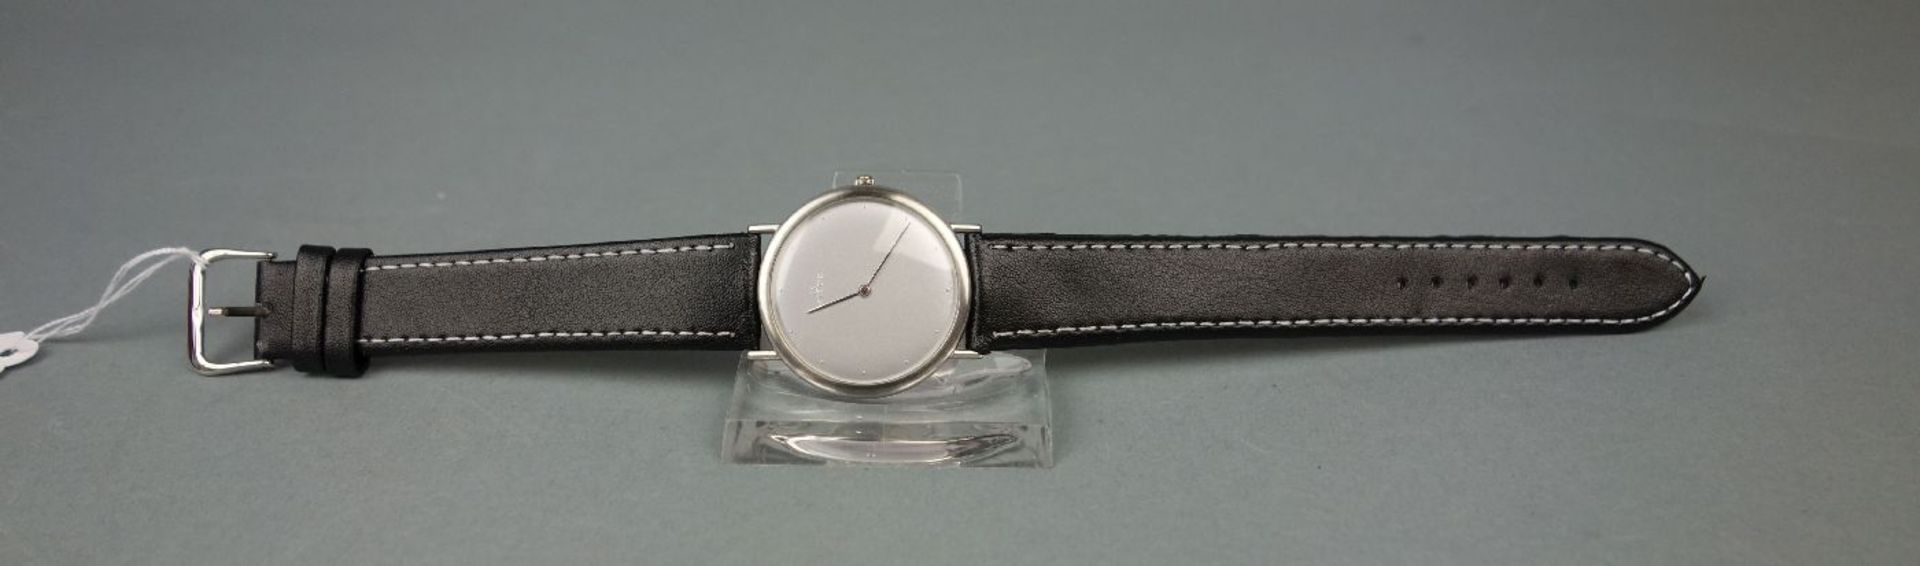 ARMBANDUHR - MILUS / wristwatch, Quartz, Schweiz. Rundes Edelstahlgehäuse an Lederarmband. - Bild 3 aus 5